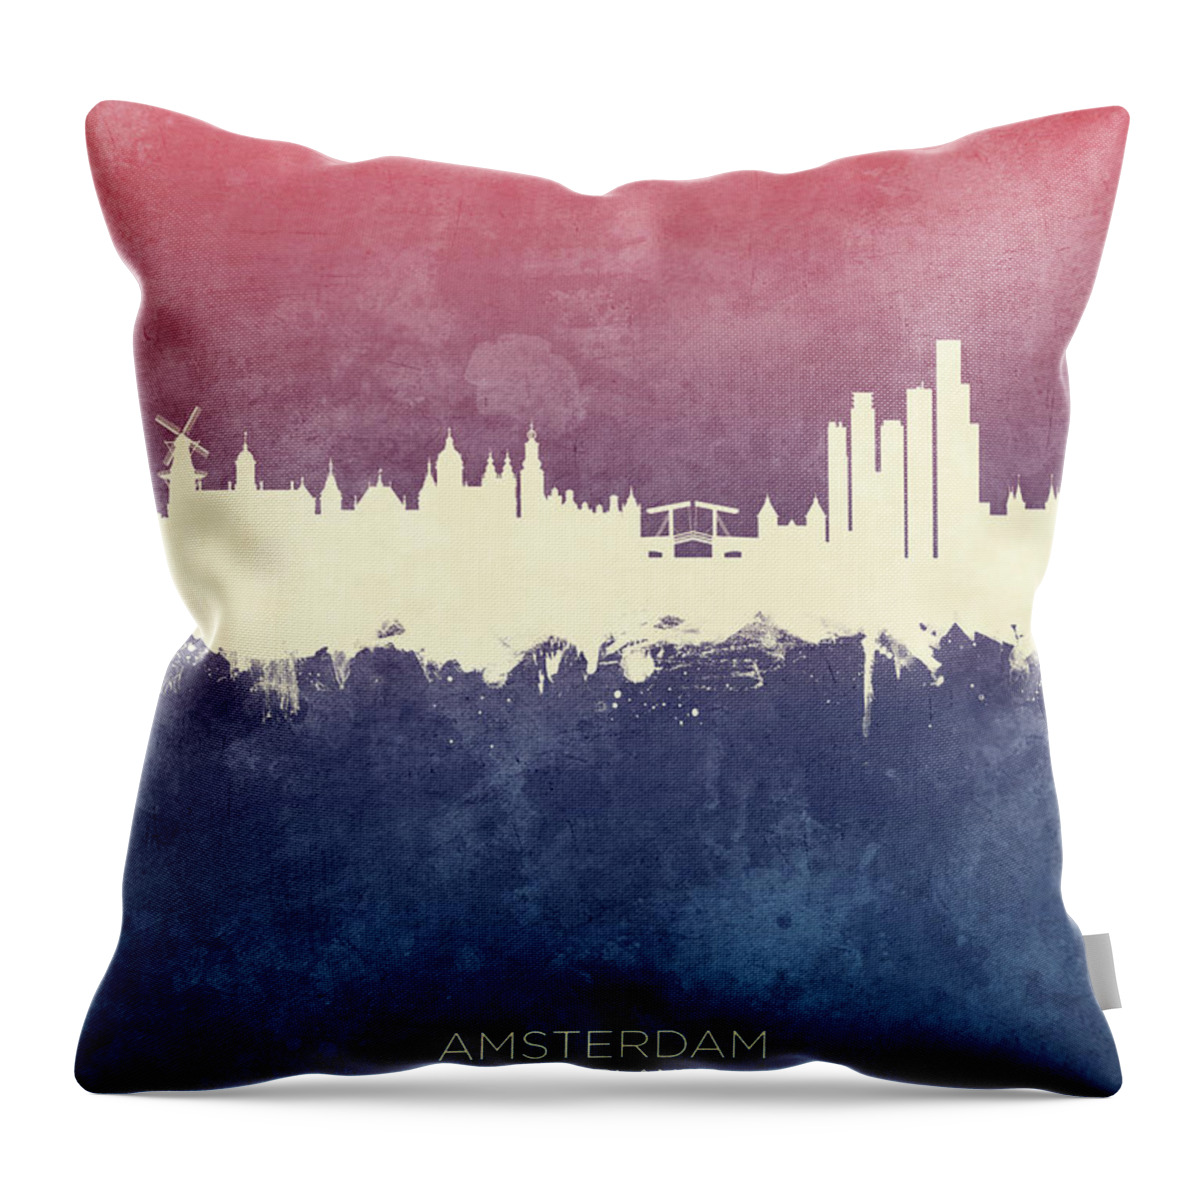 Amsterdam Throw Pillow featuring the digital art Amsterdam The Netherlands Skyline #17 by Michael Tompsett